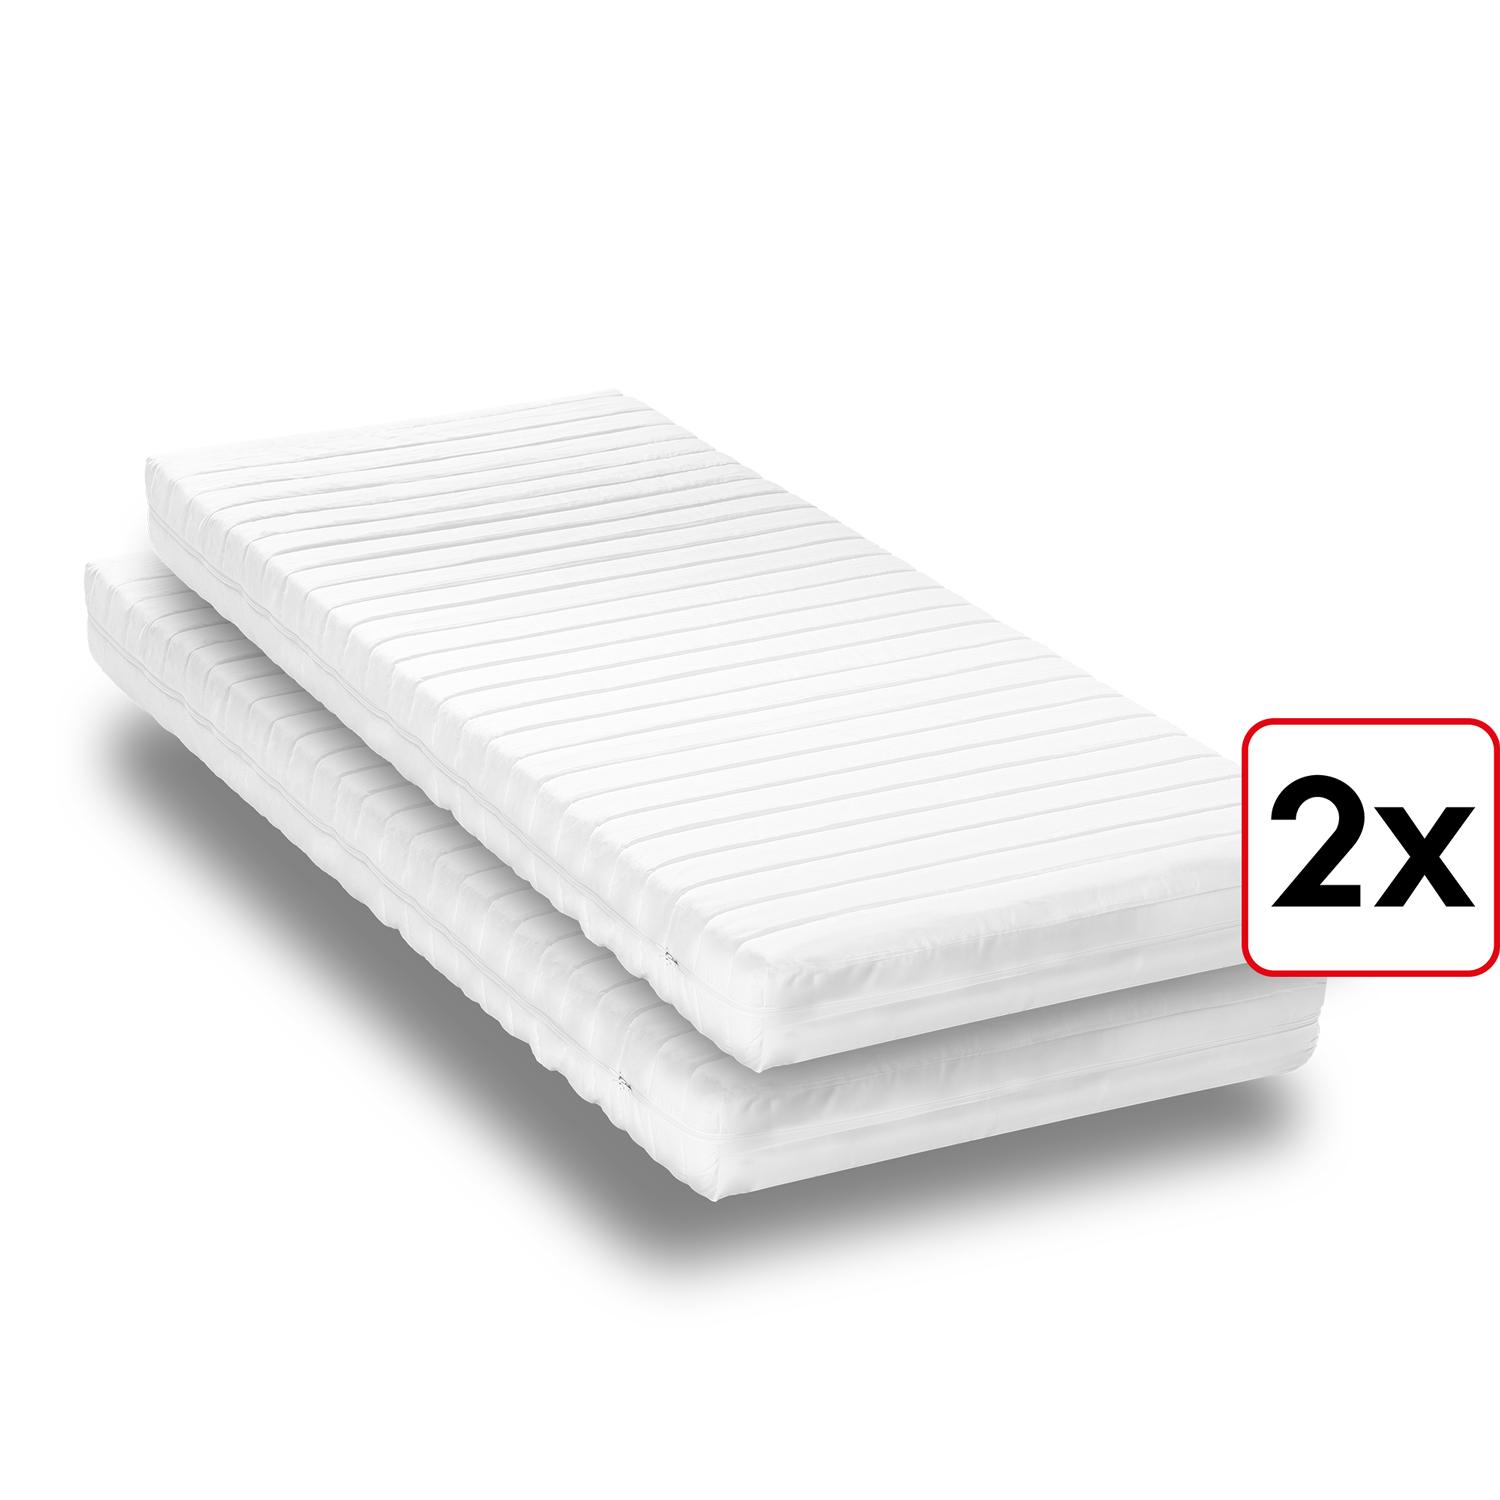 Cold foam mattress K16 80 x 200 cm, height 16 cm, firmness level H2/H3 Twin